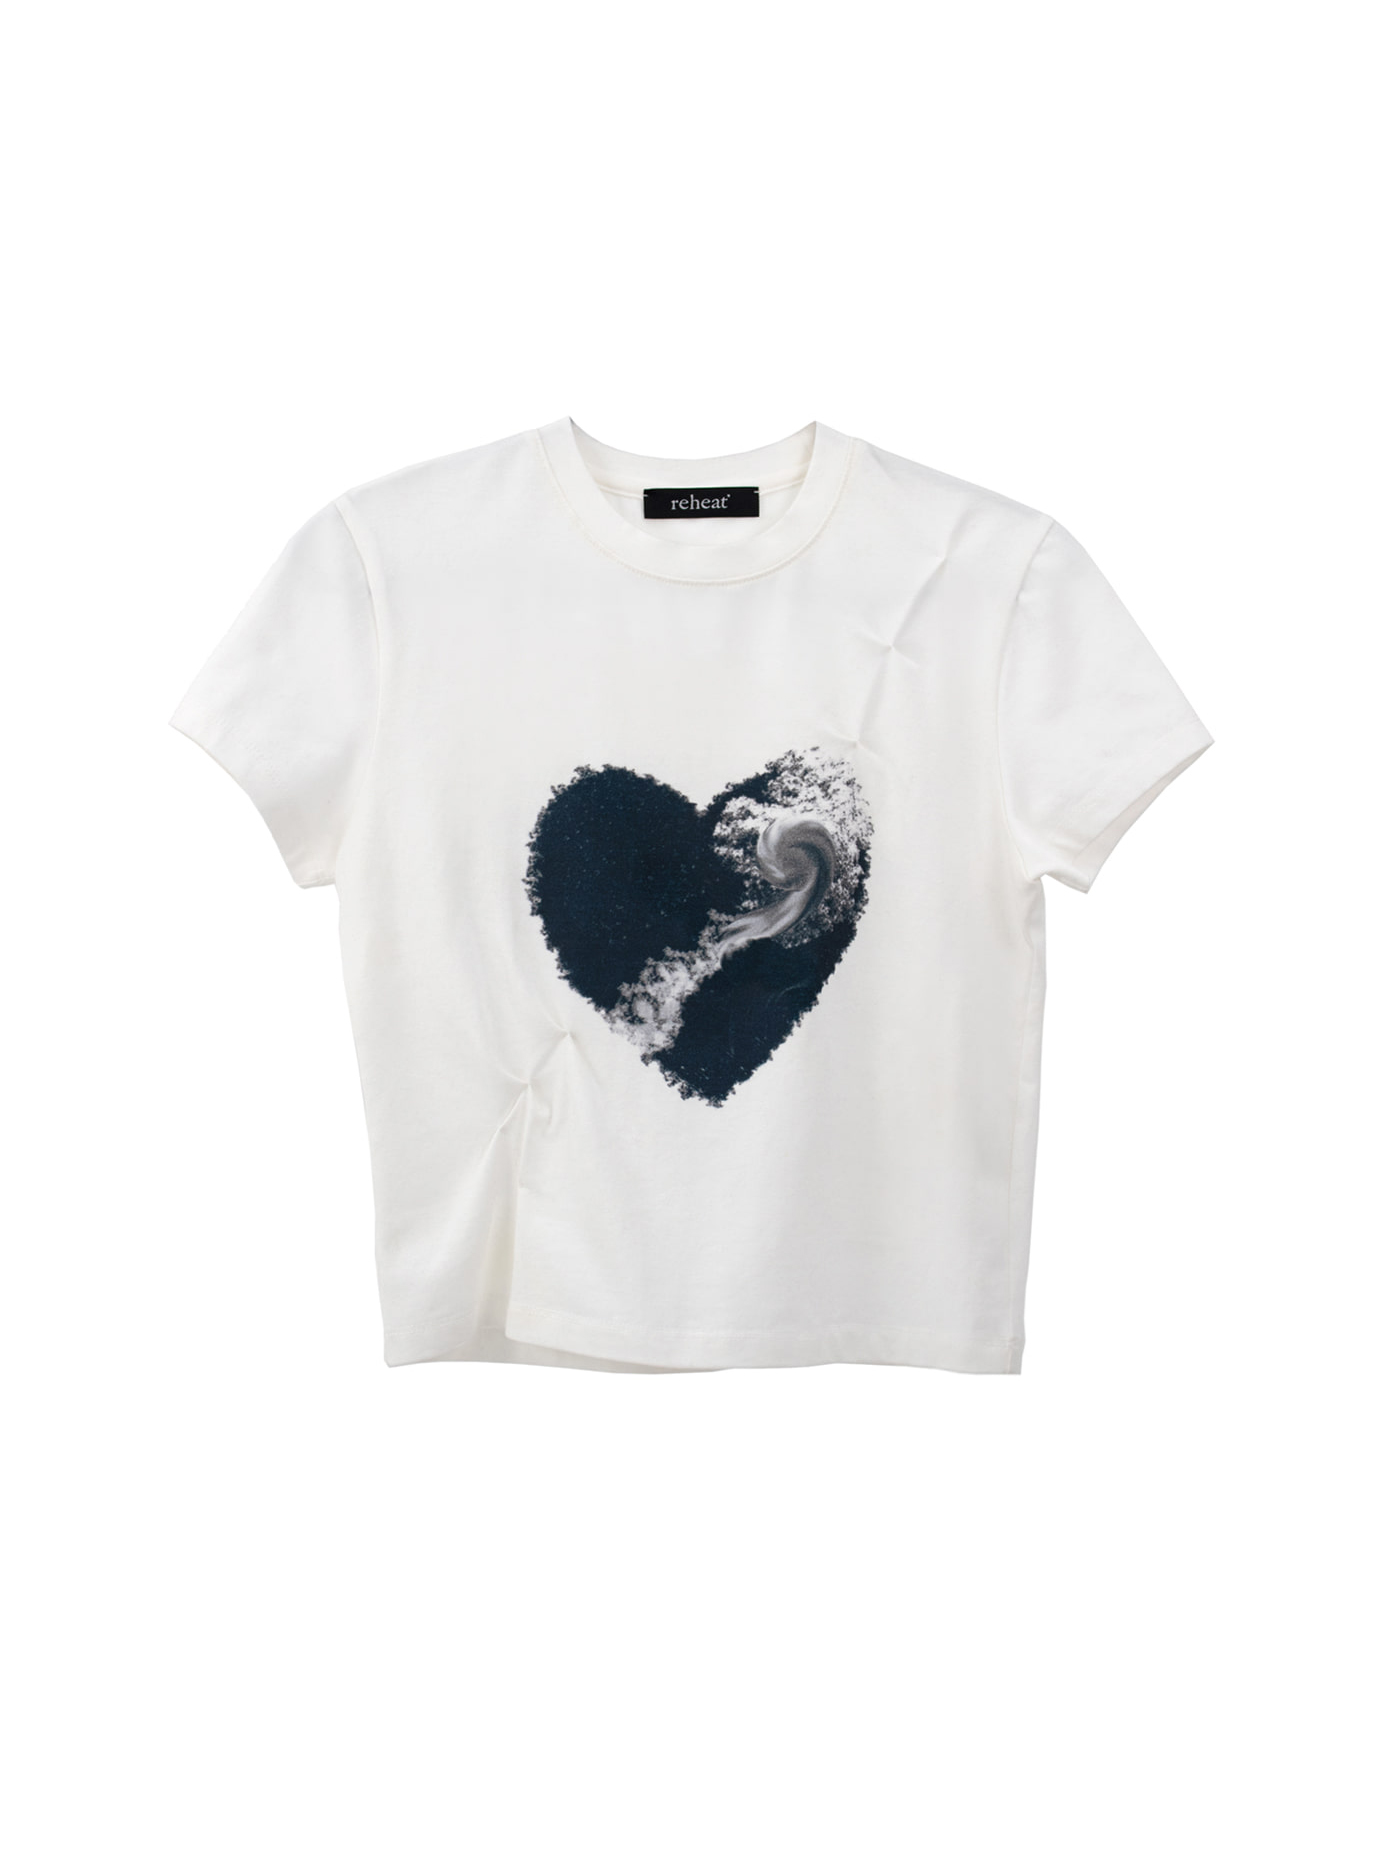 Heart Cloud T-Shirt - White